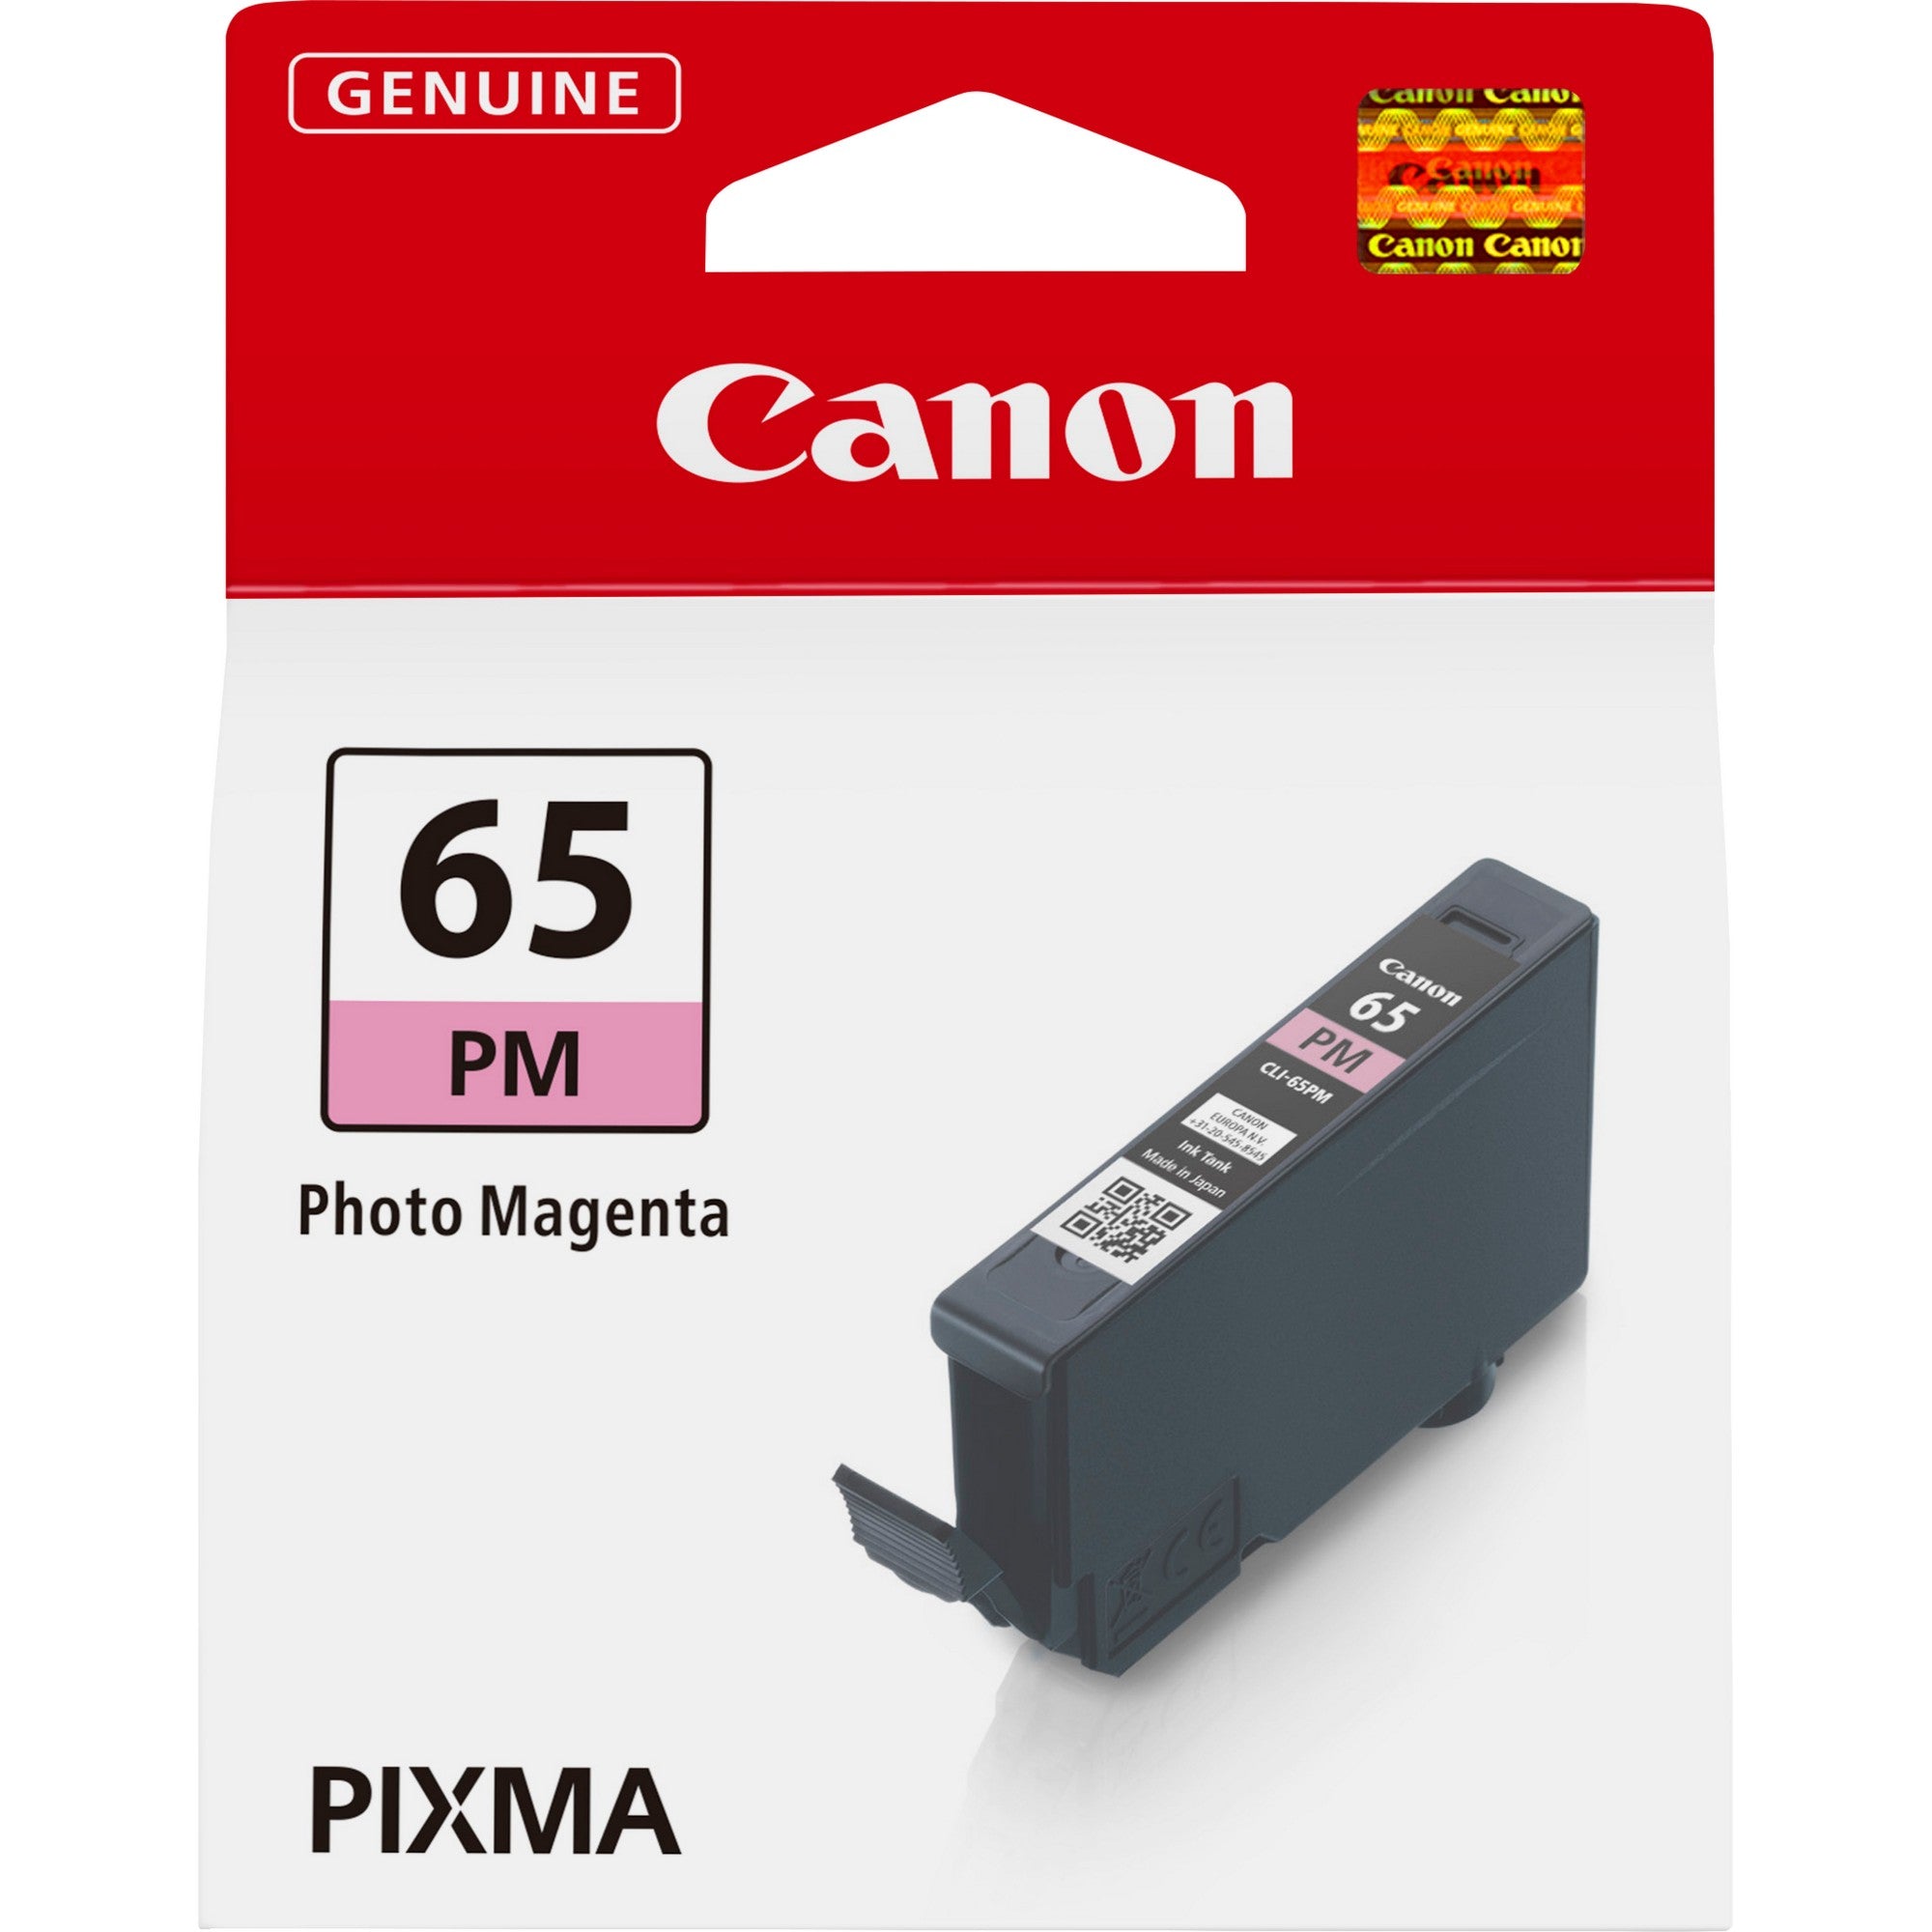 Canon CLI-65M Original Ink Cartridge Photo Magenta for PIXMA PRO-200 Printer - Product Photo 2 - Front View